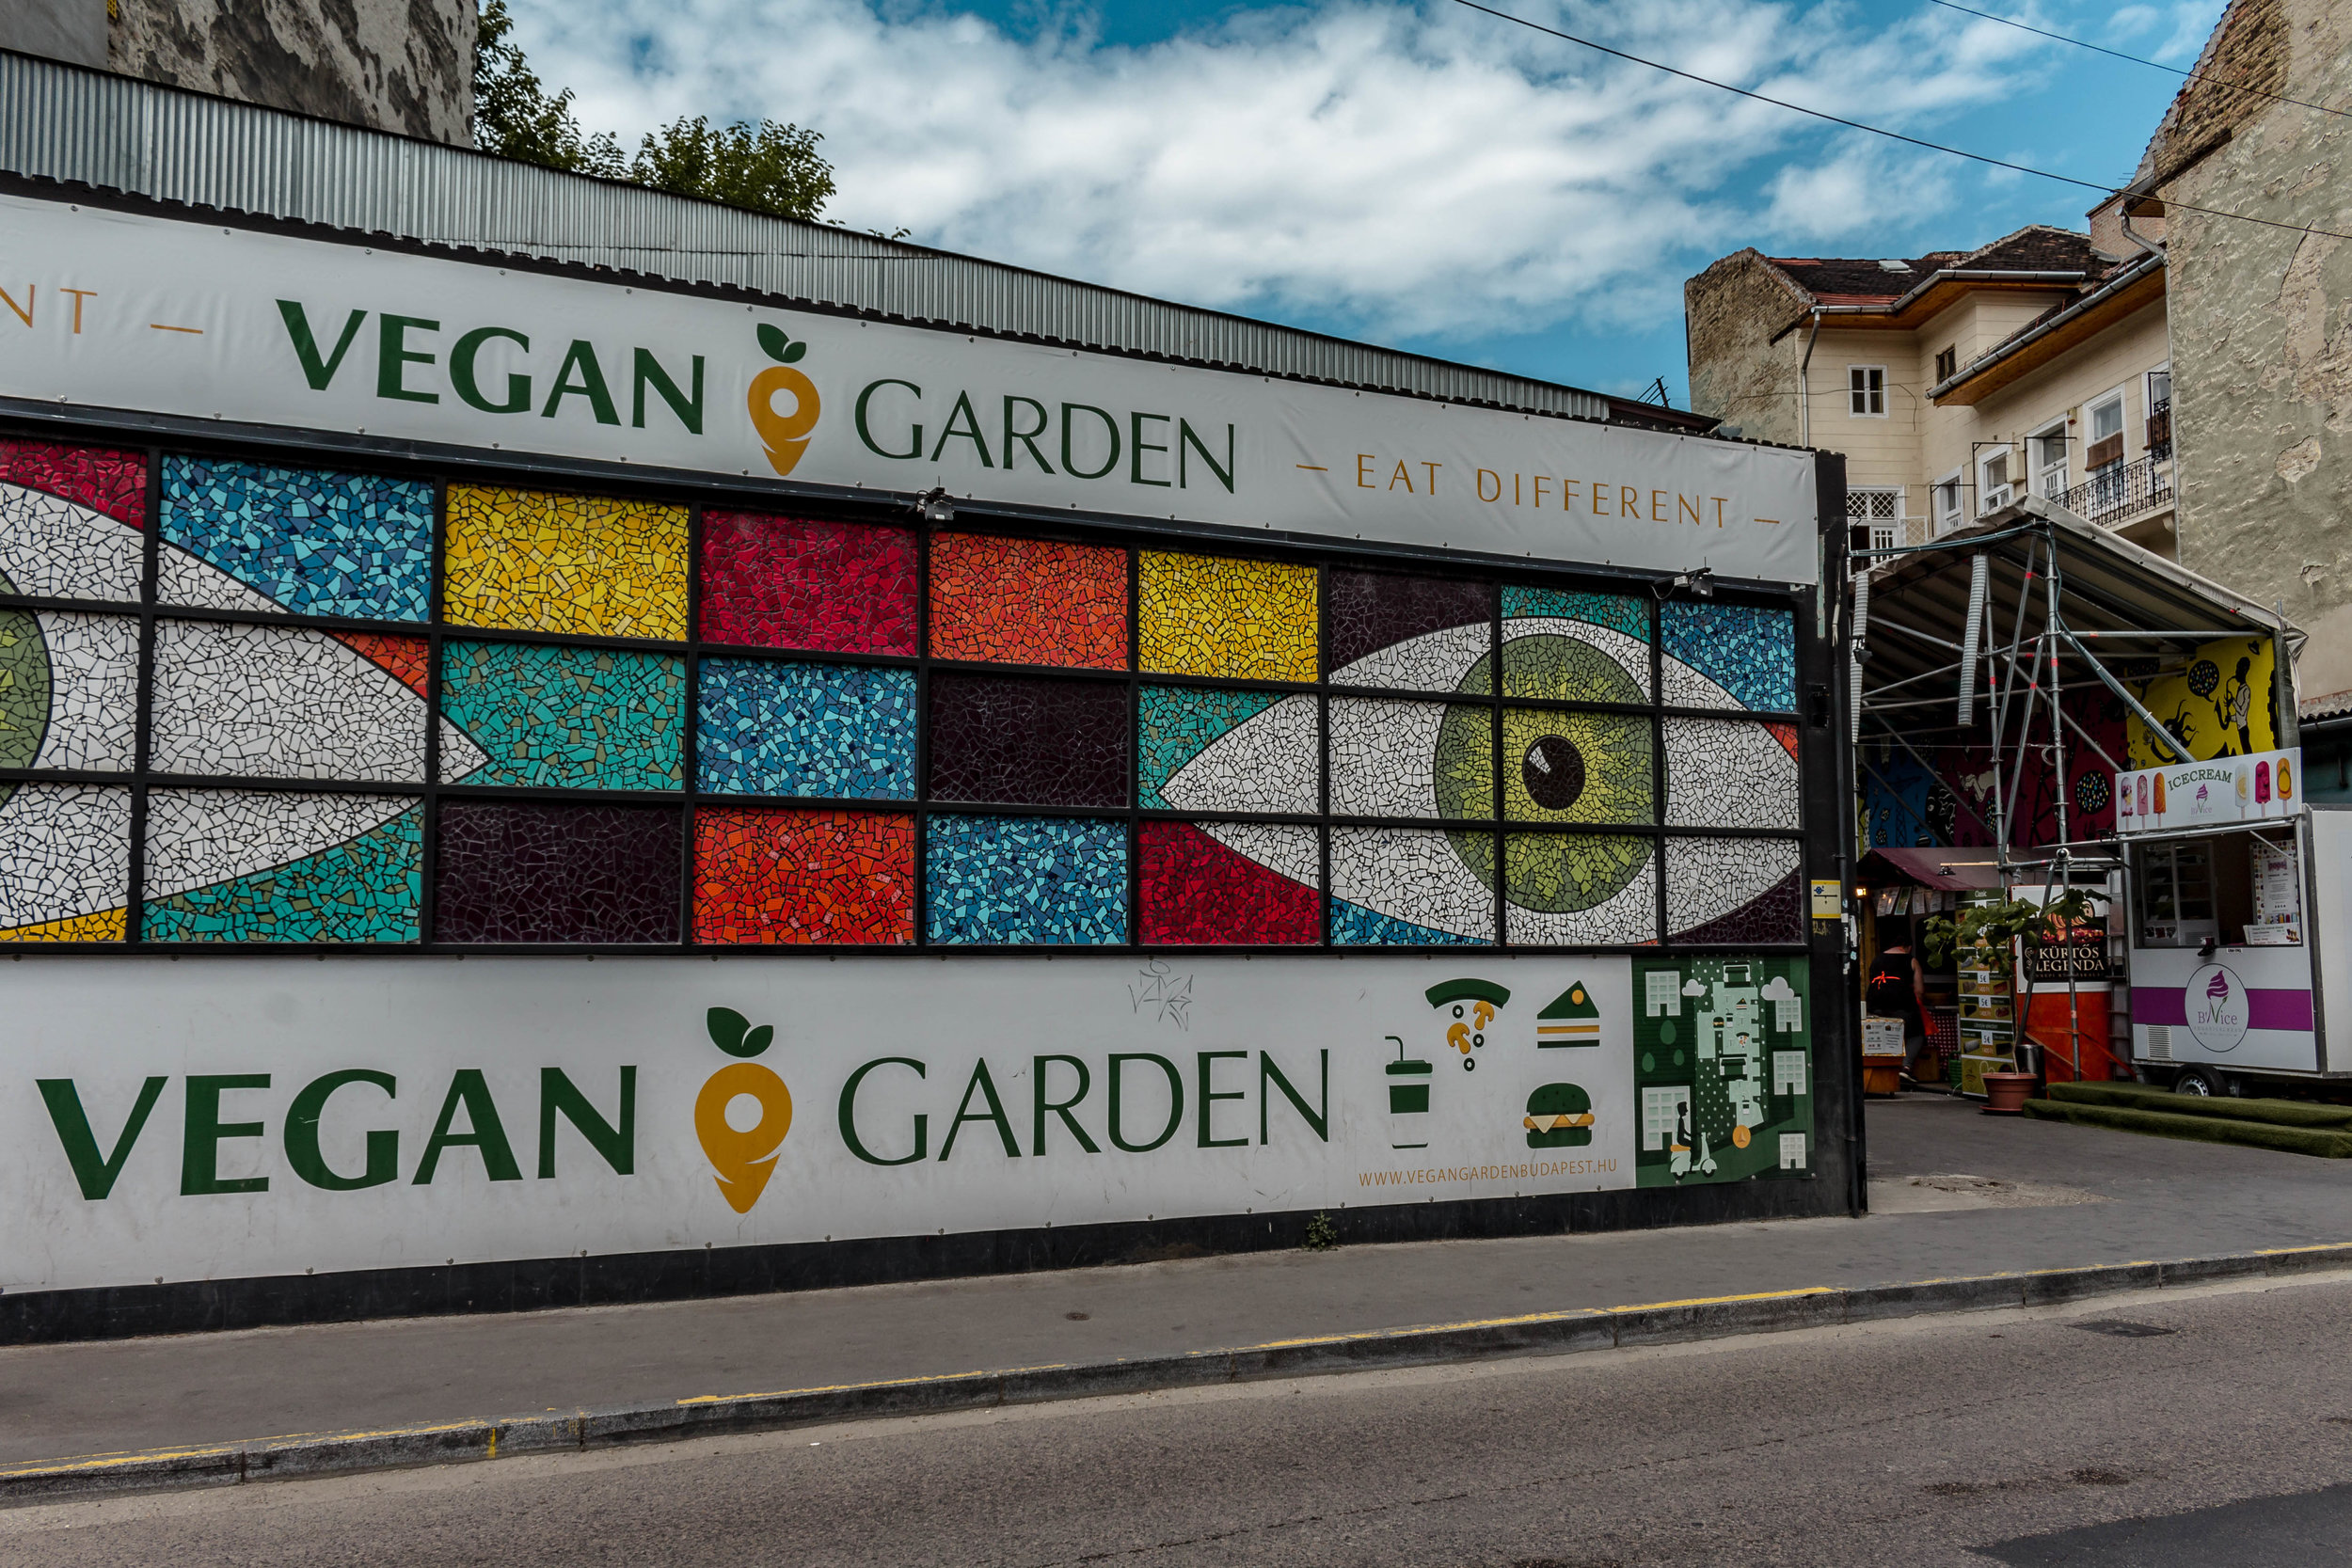 Vegan Garden exterior, Budapest, Hungary